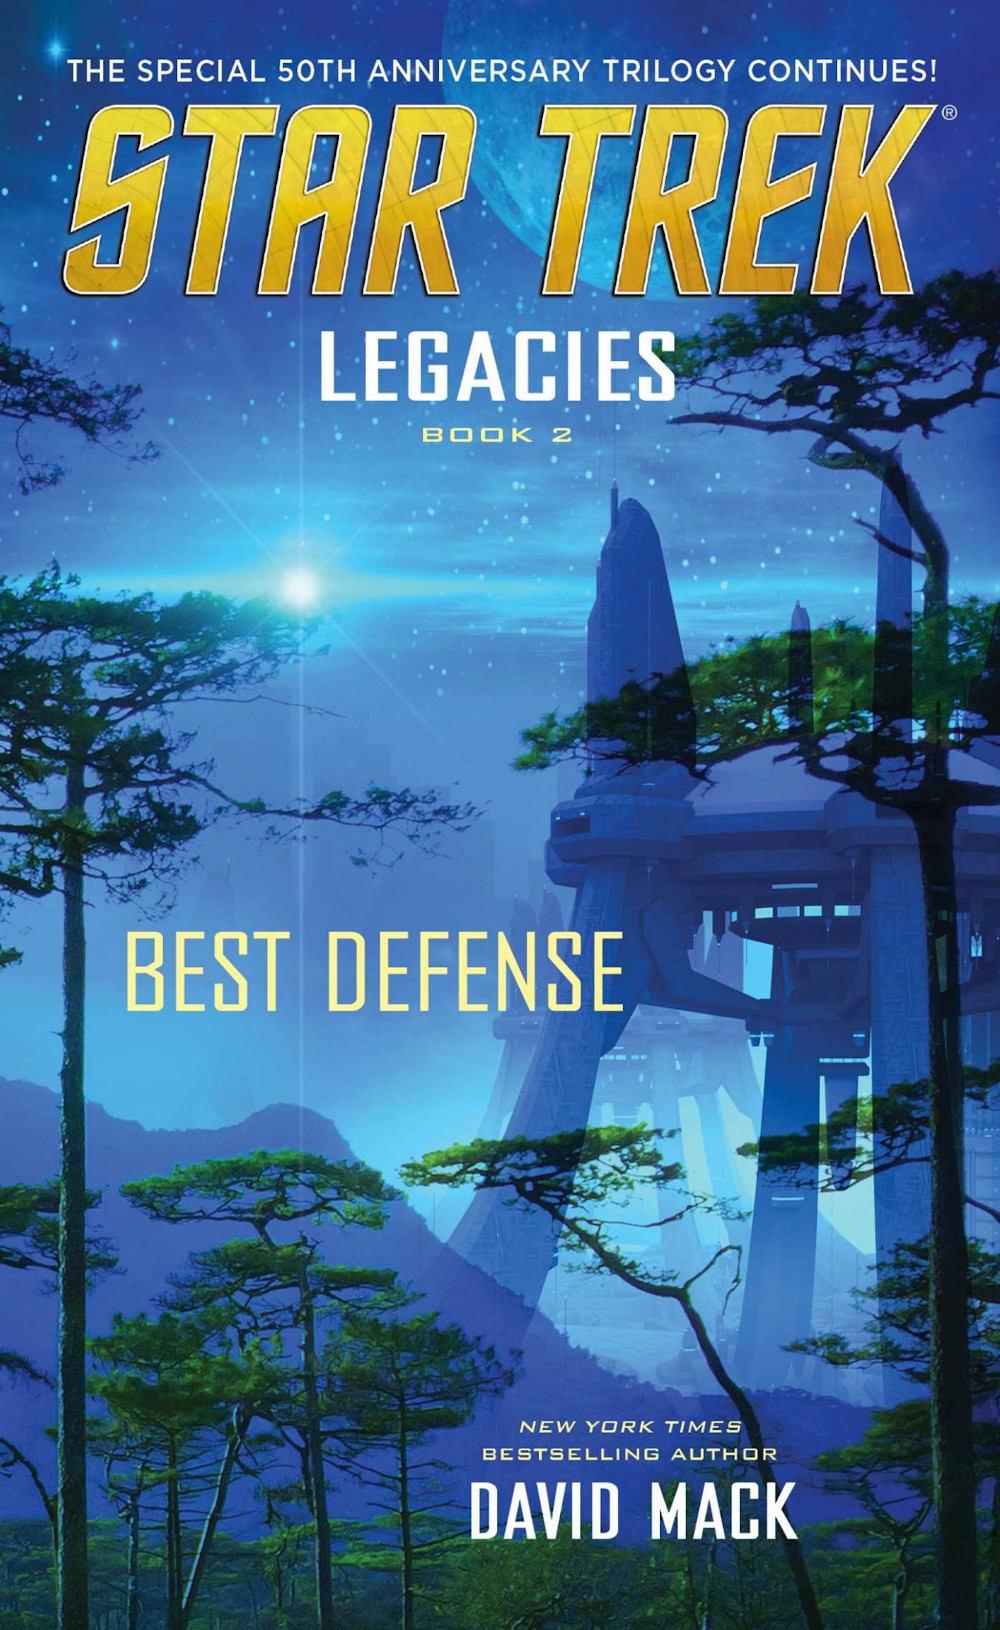 Legacies, Book 2: Best Defense (Jul 2016)